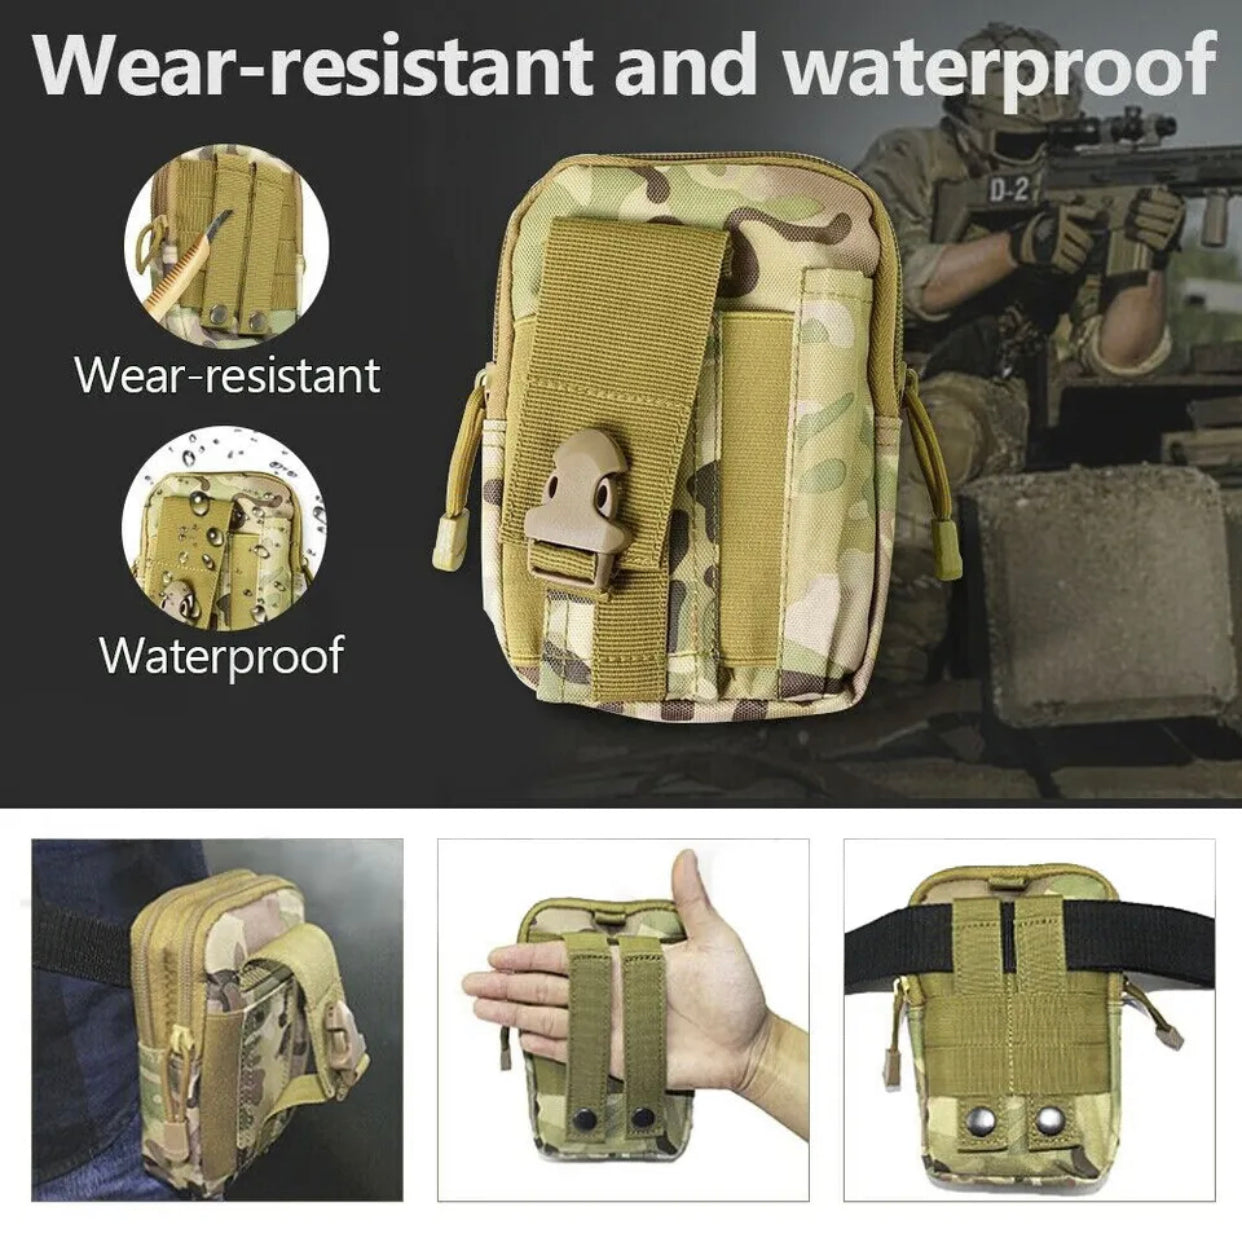 Emergency Survival Equipment Kit - jmscamping.com